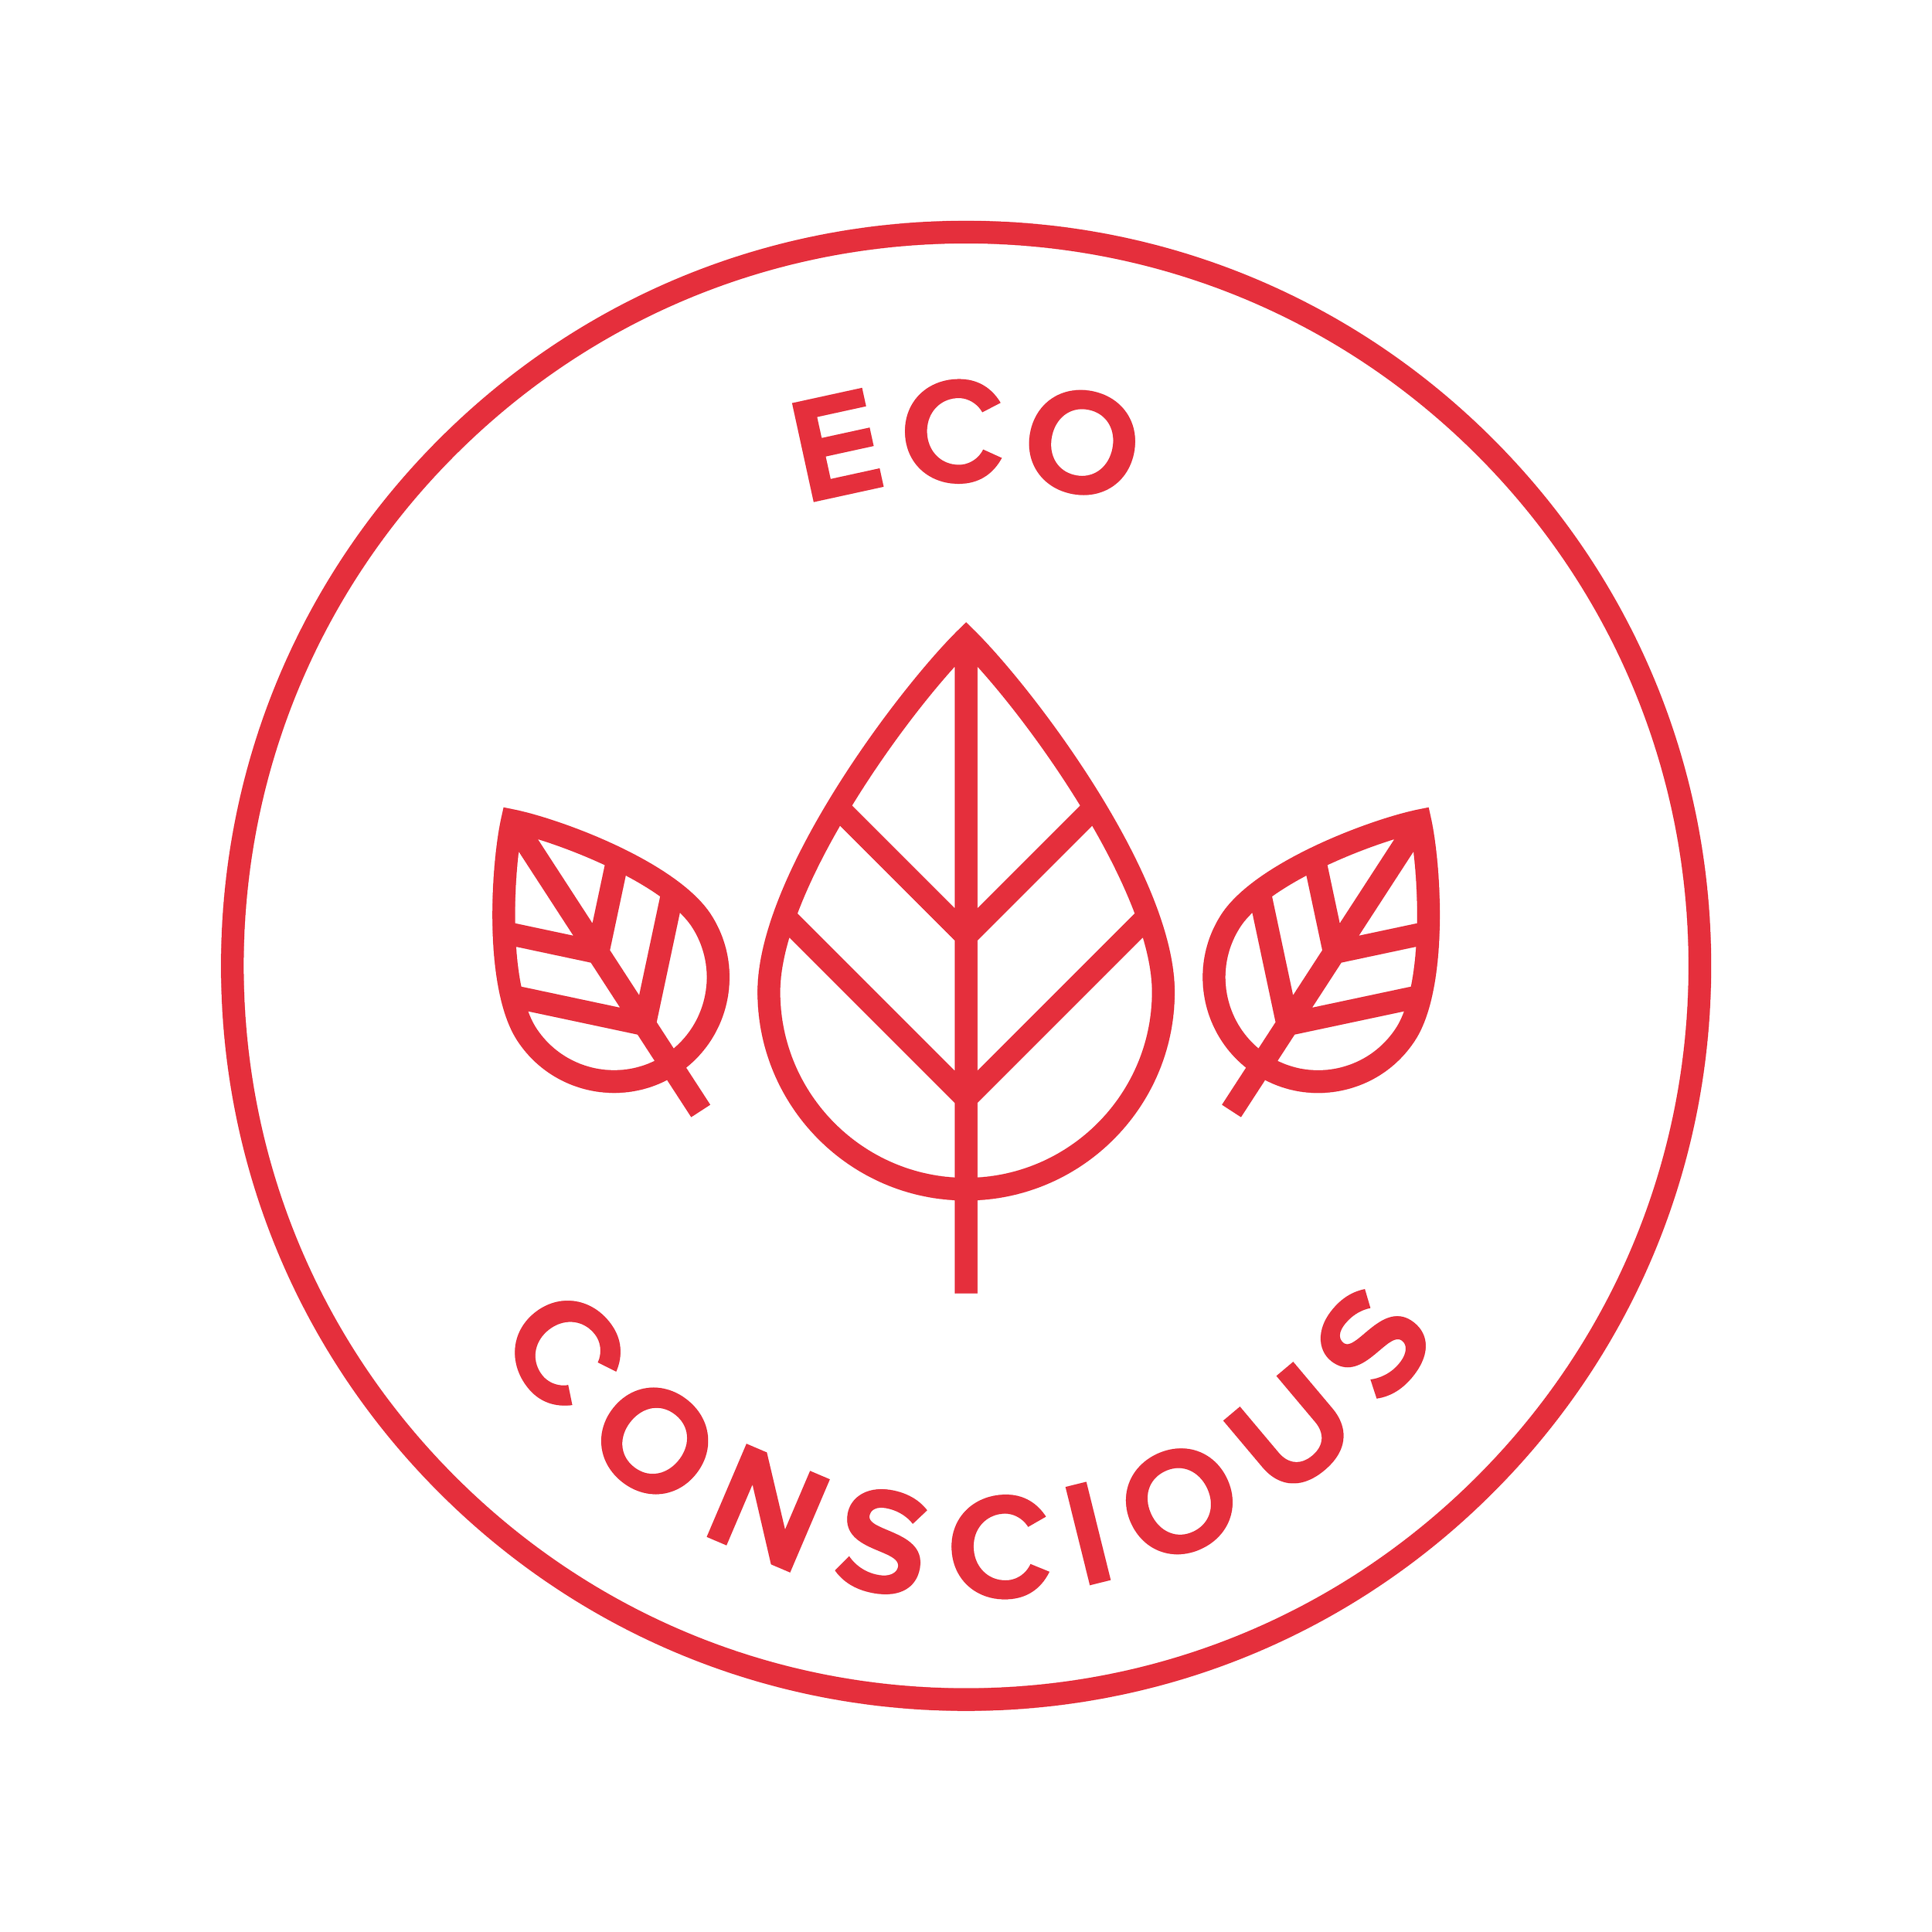 fair_good-values-icon-5-eco-conscious.png